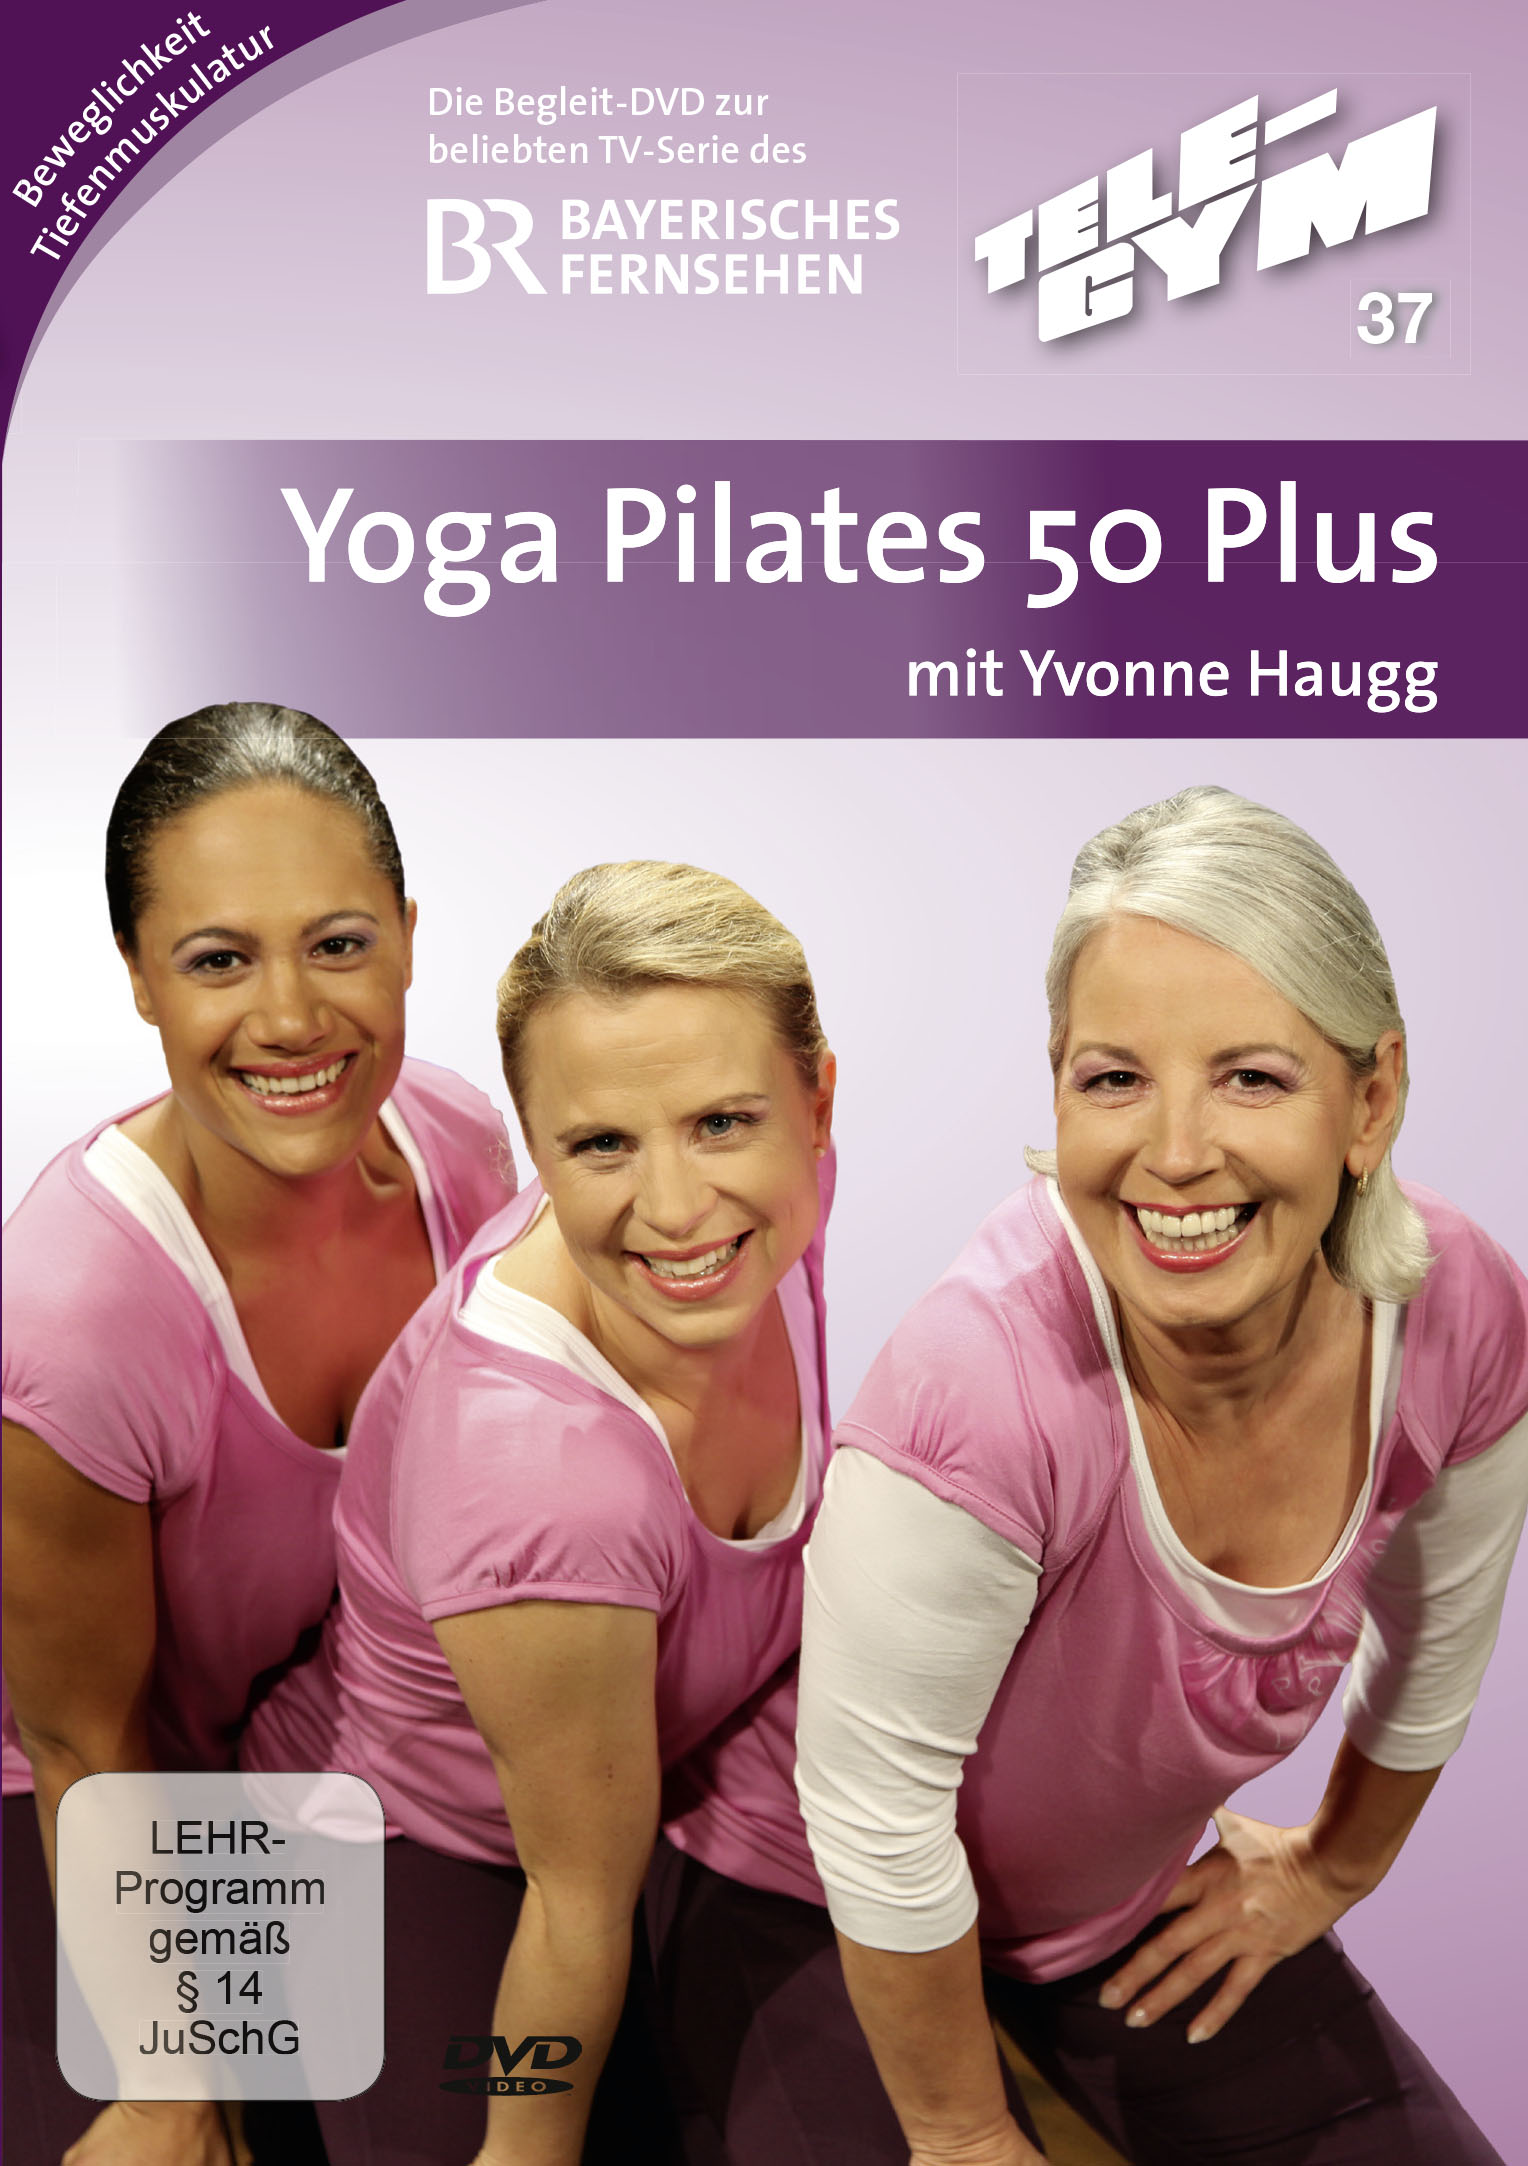 Yoga Pilates 50 Plus